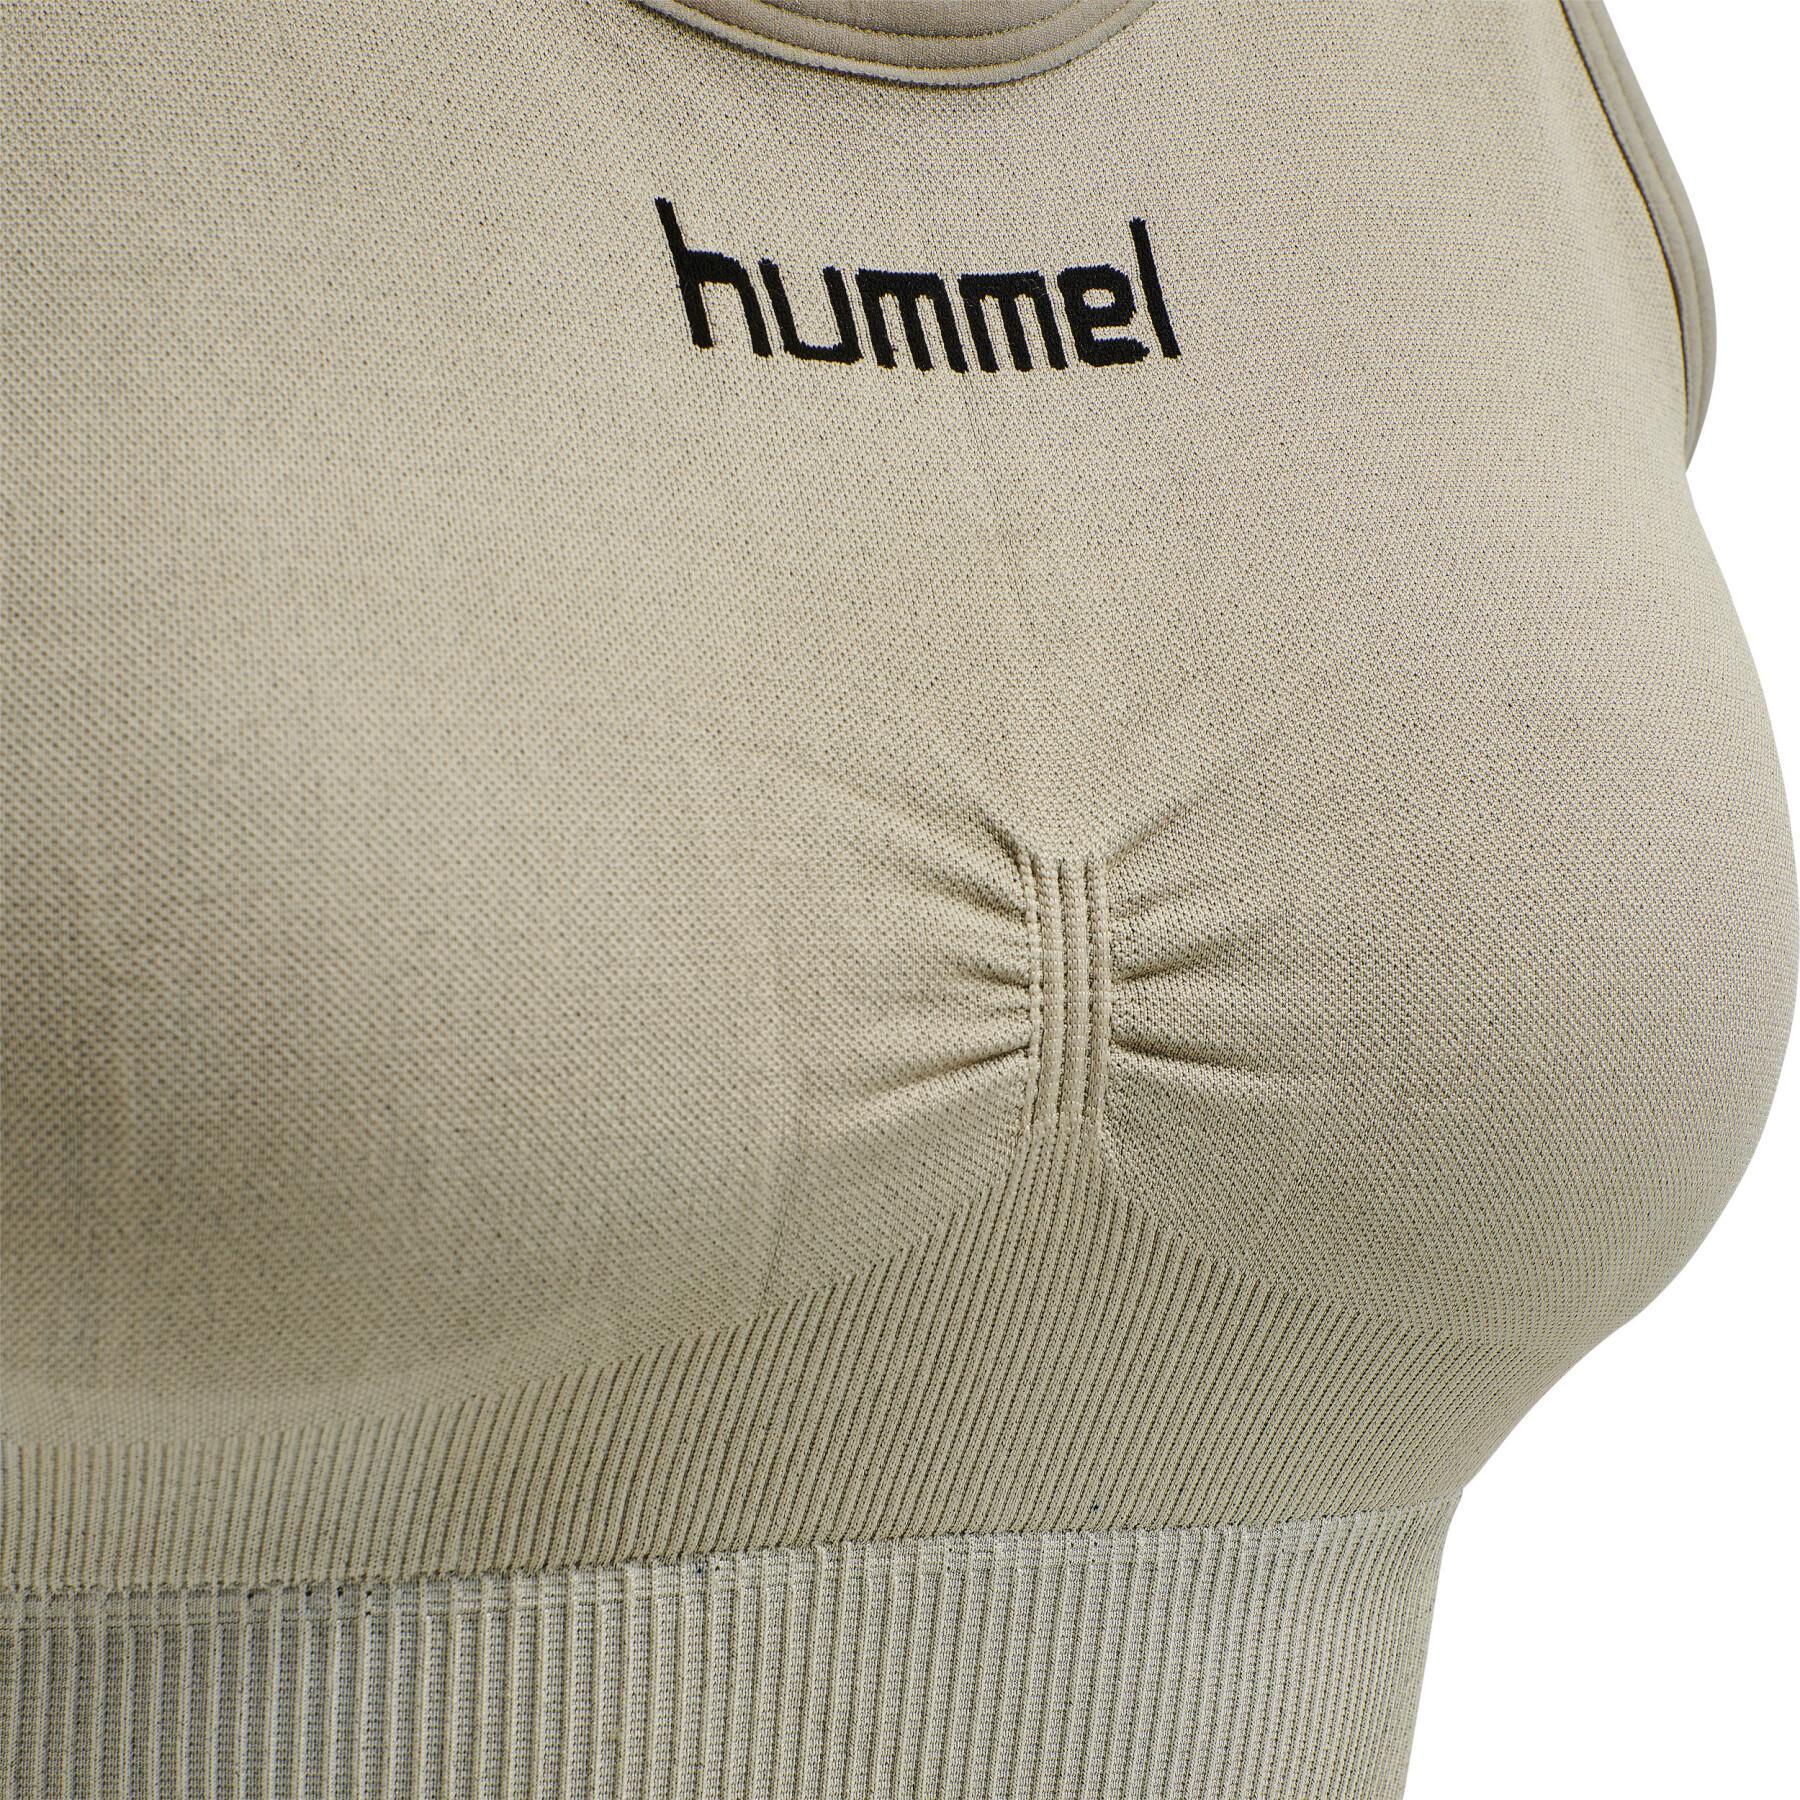 Reggiseno senza cuciture per donna Hummel First